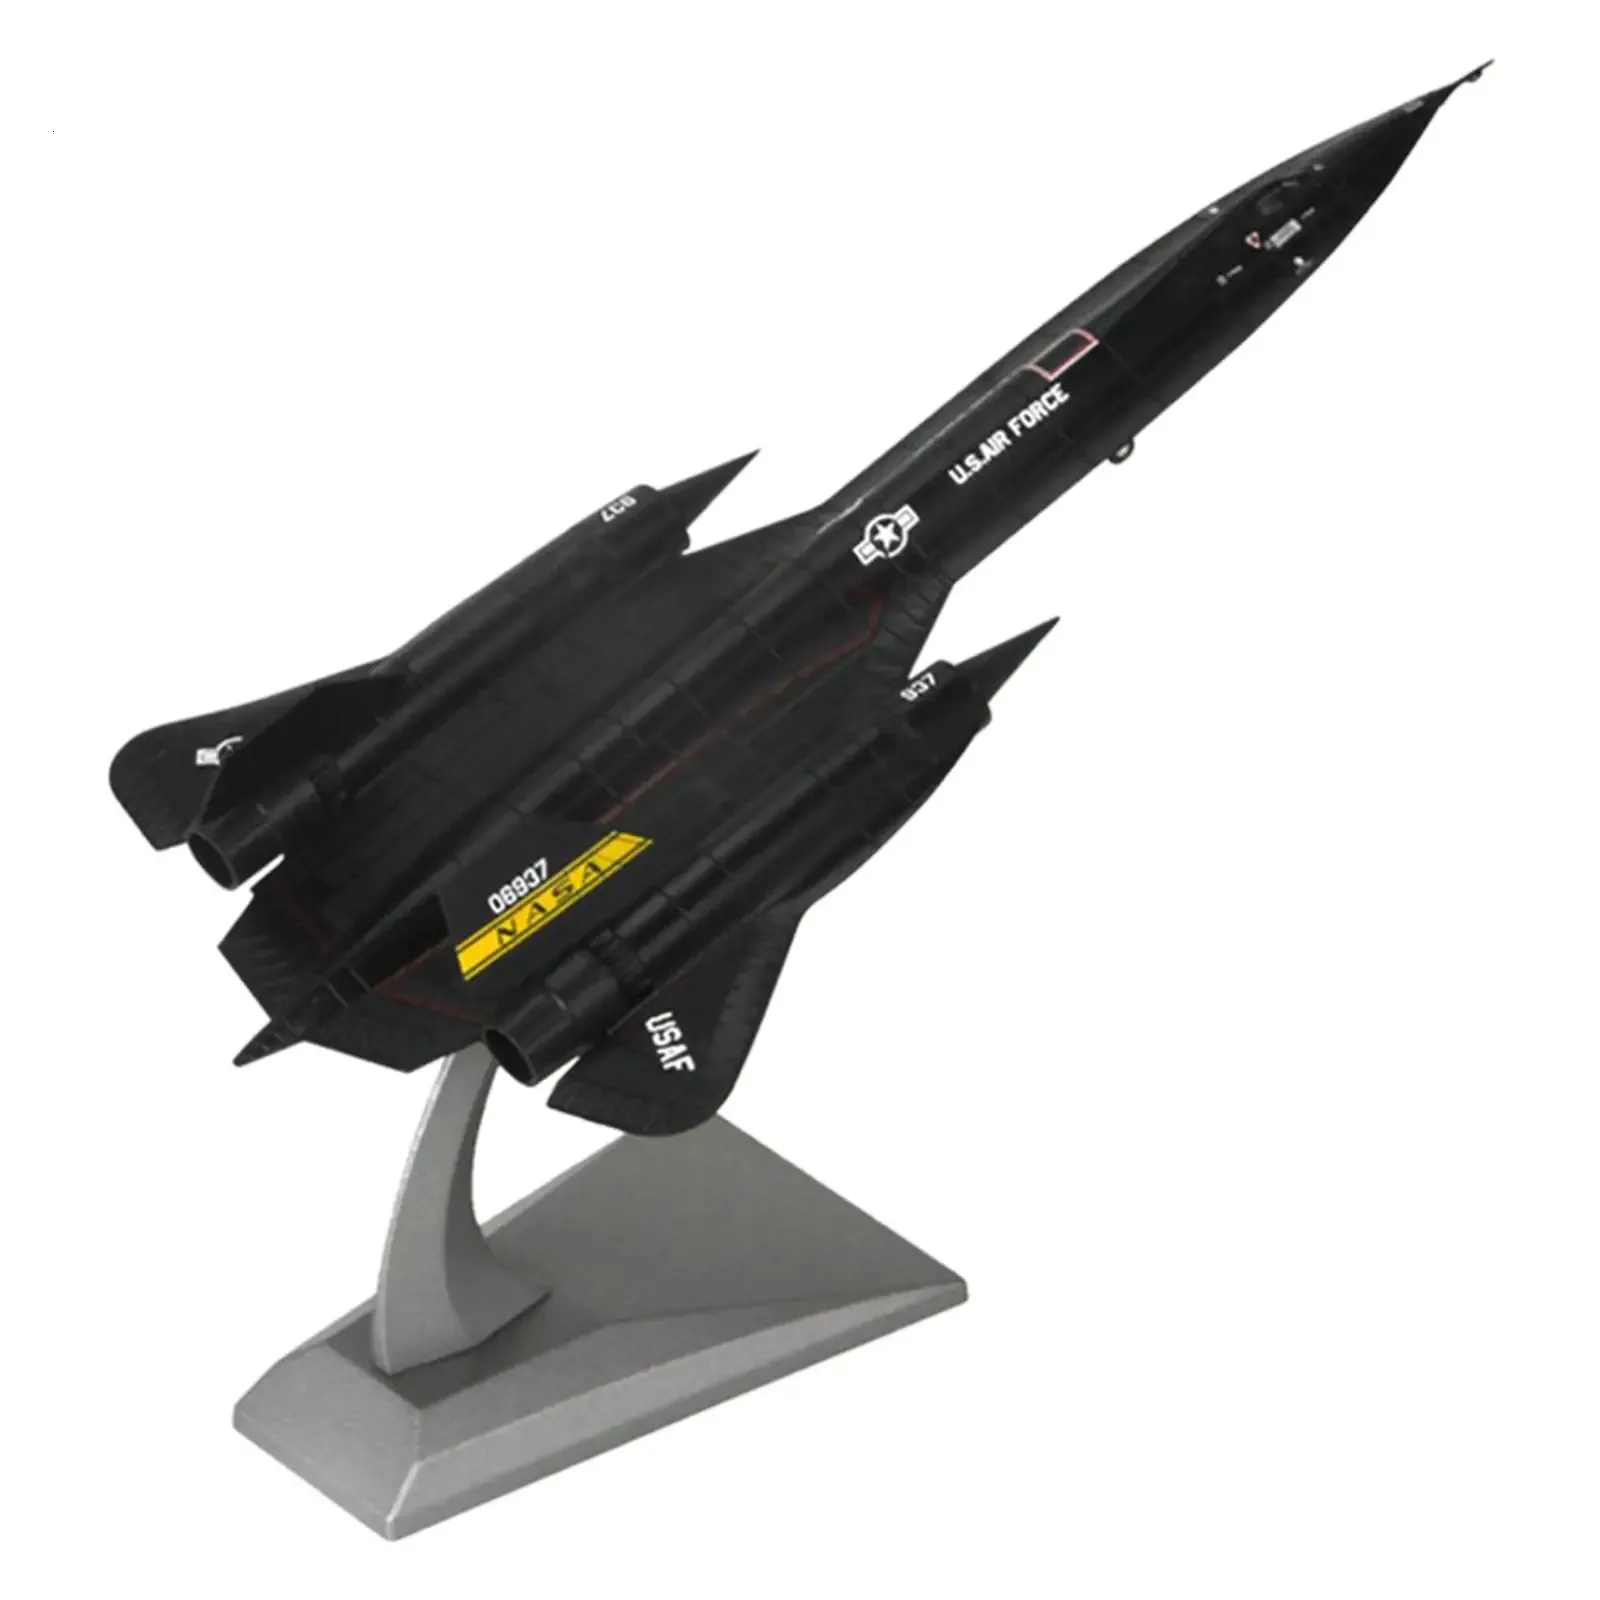 1/144 Alloy 1A Blackbird Reconnaissance Plane  Model W/ Display Stand